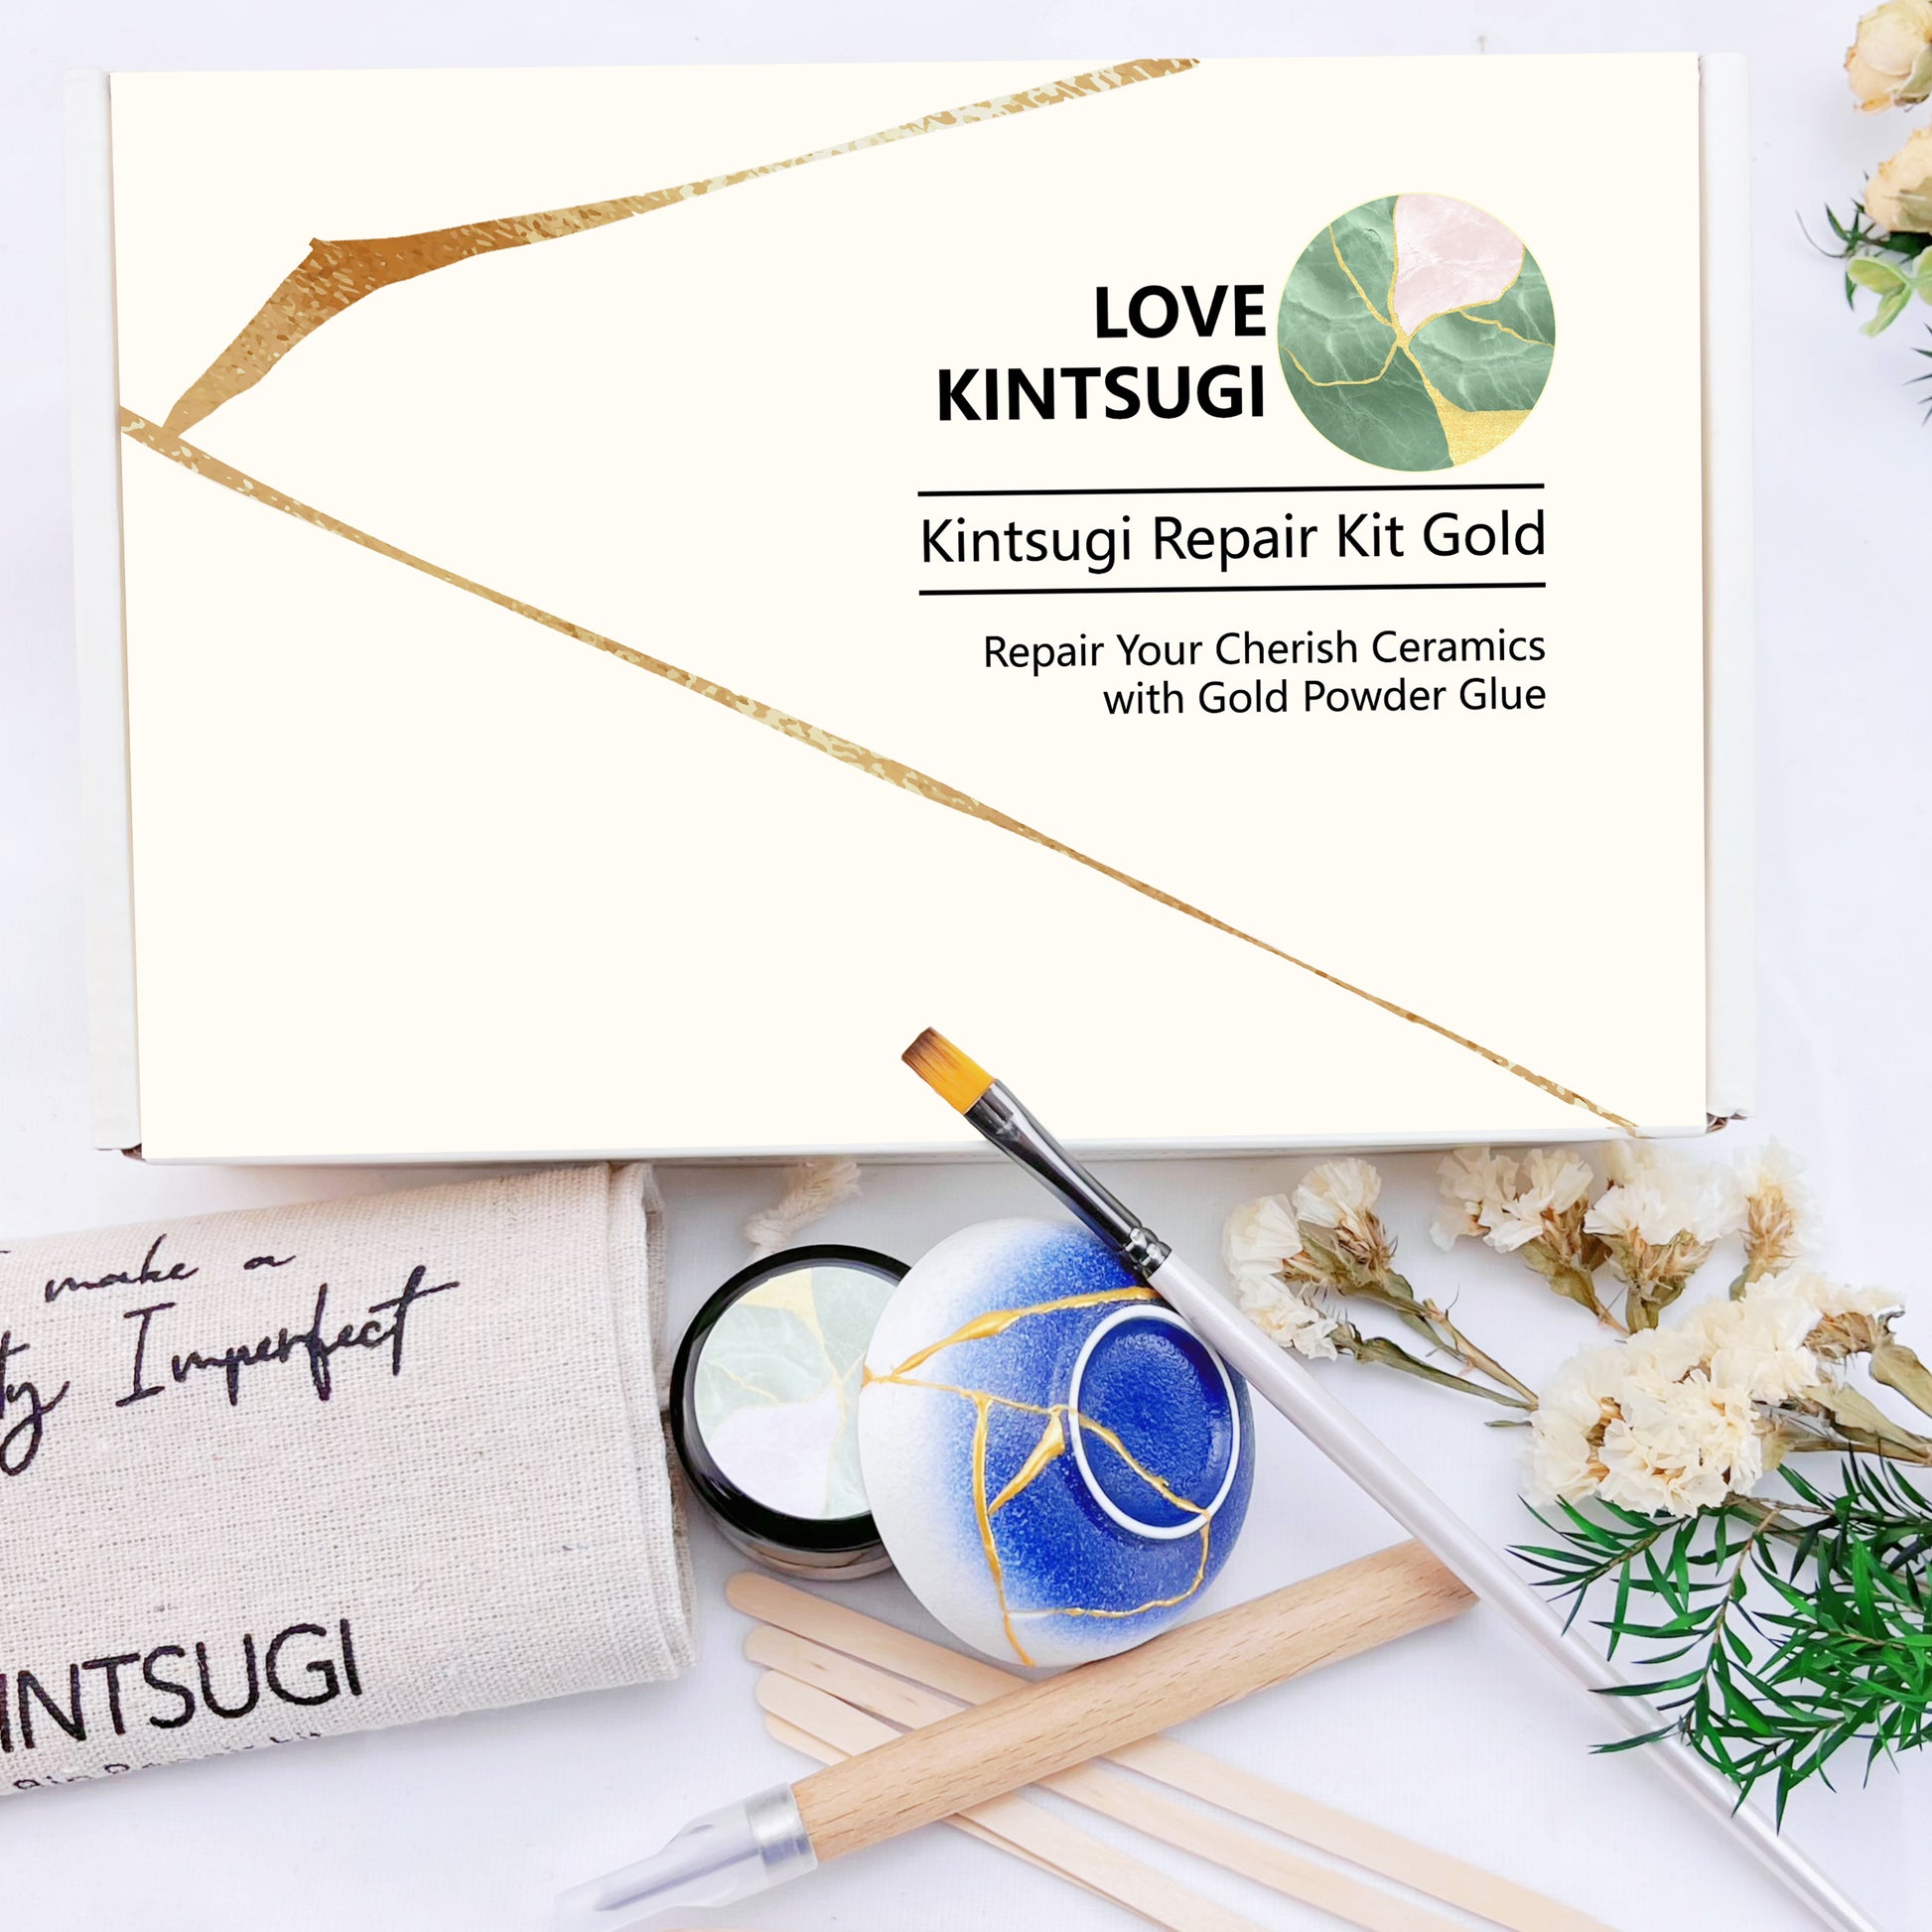 Kintsugi repair kit: EVERYTHING for this Art in gold.